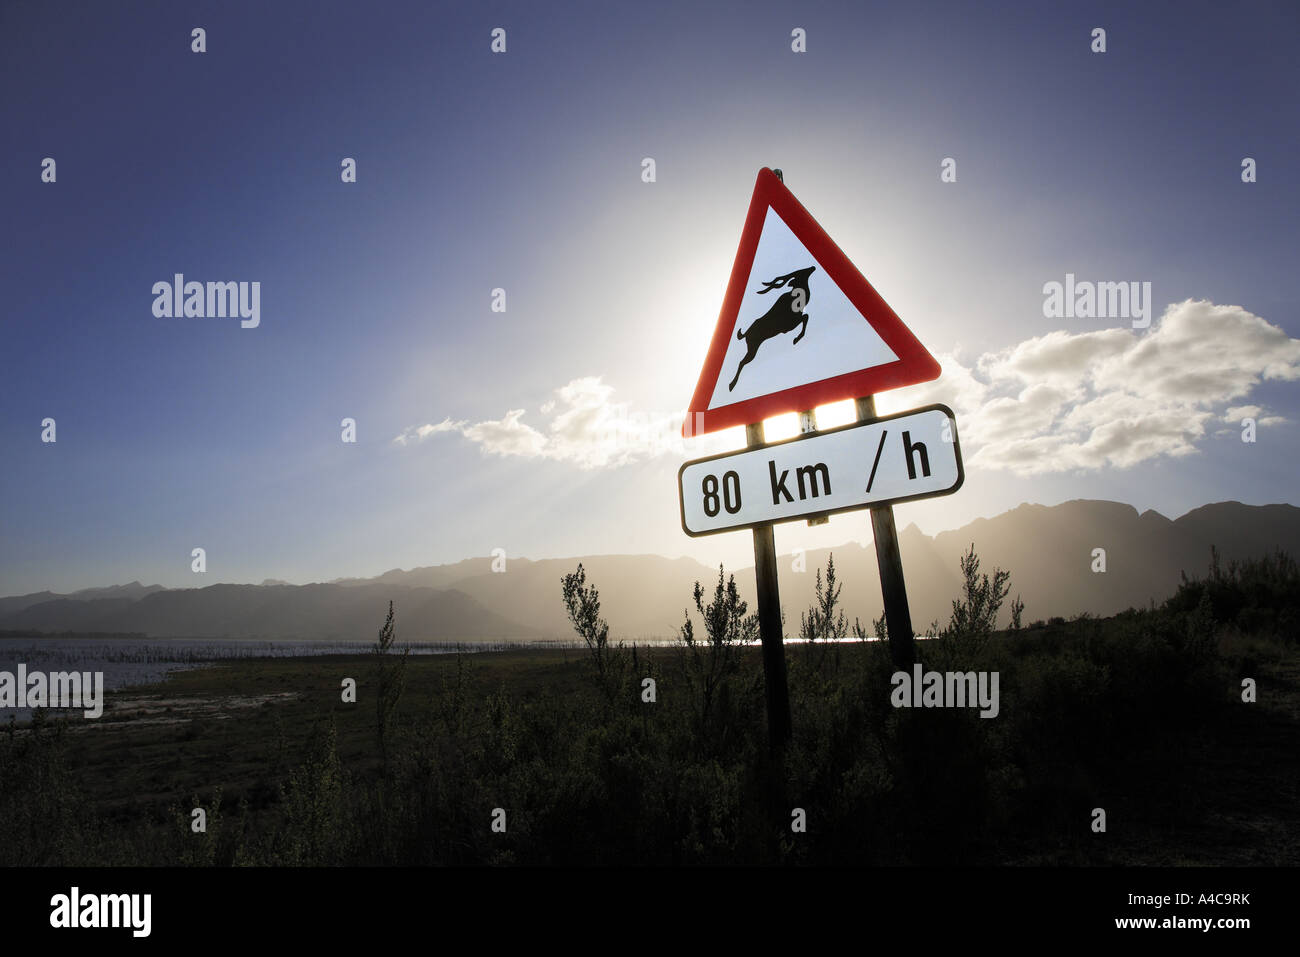 antelope road warning sign Stock Photo